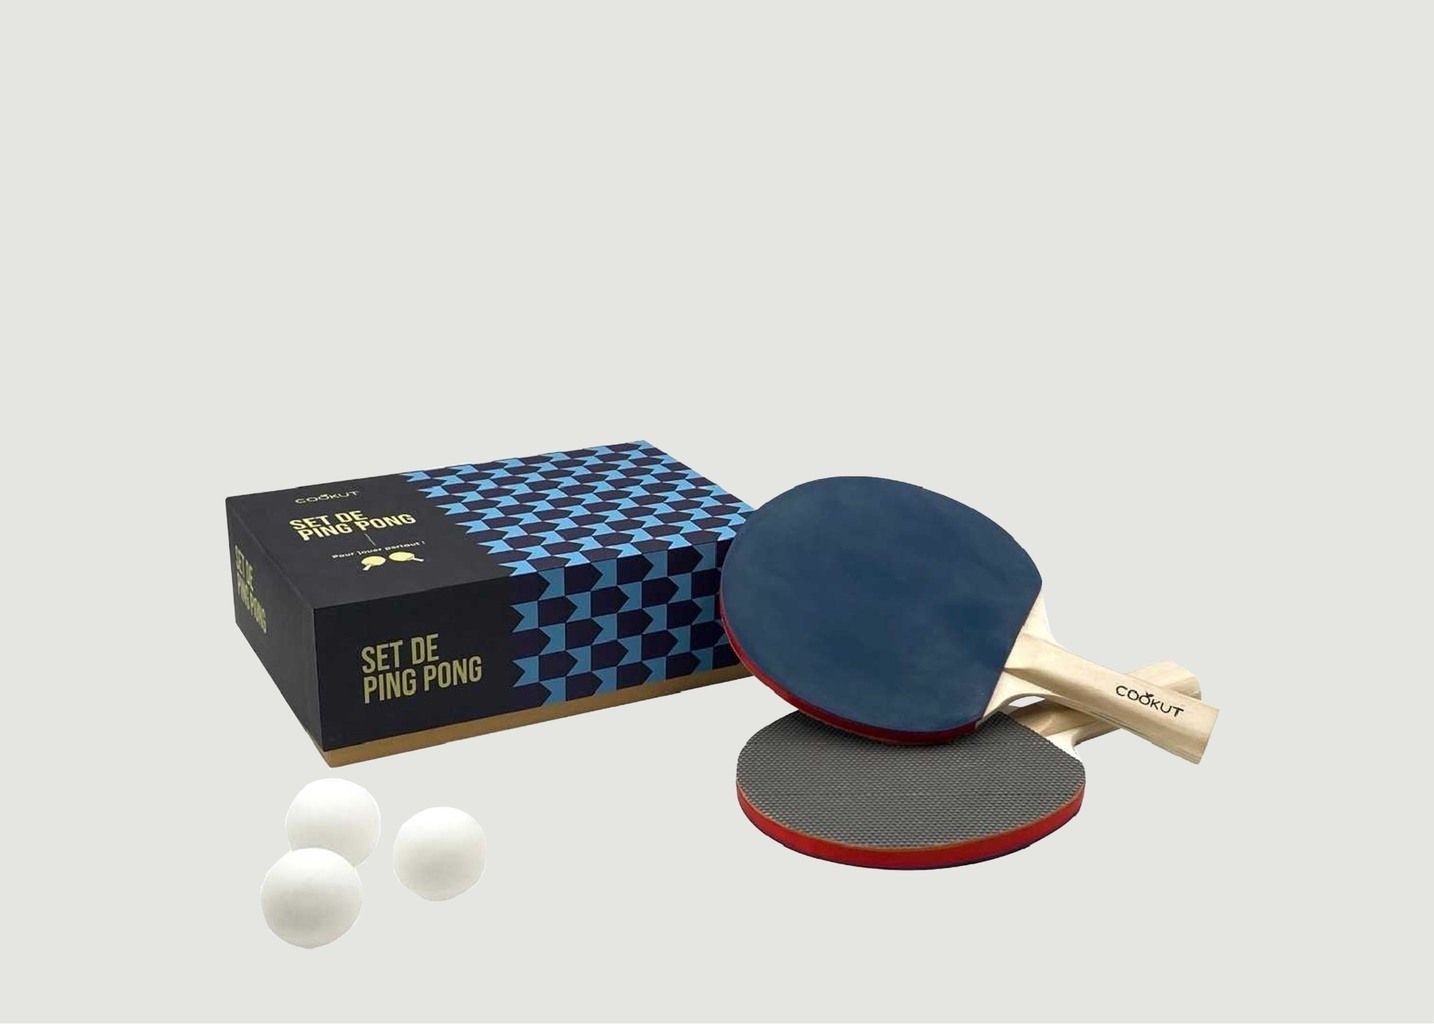 Ping Pong set - Cookut